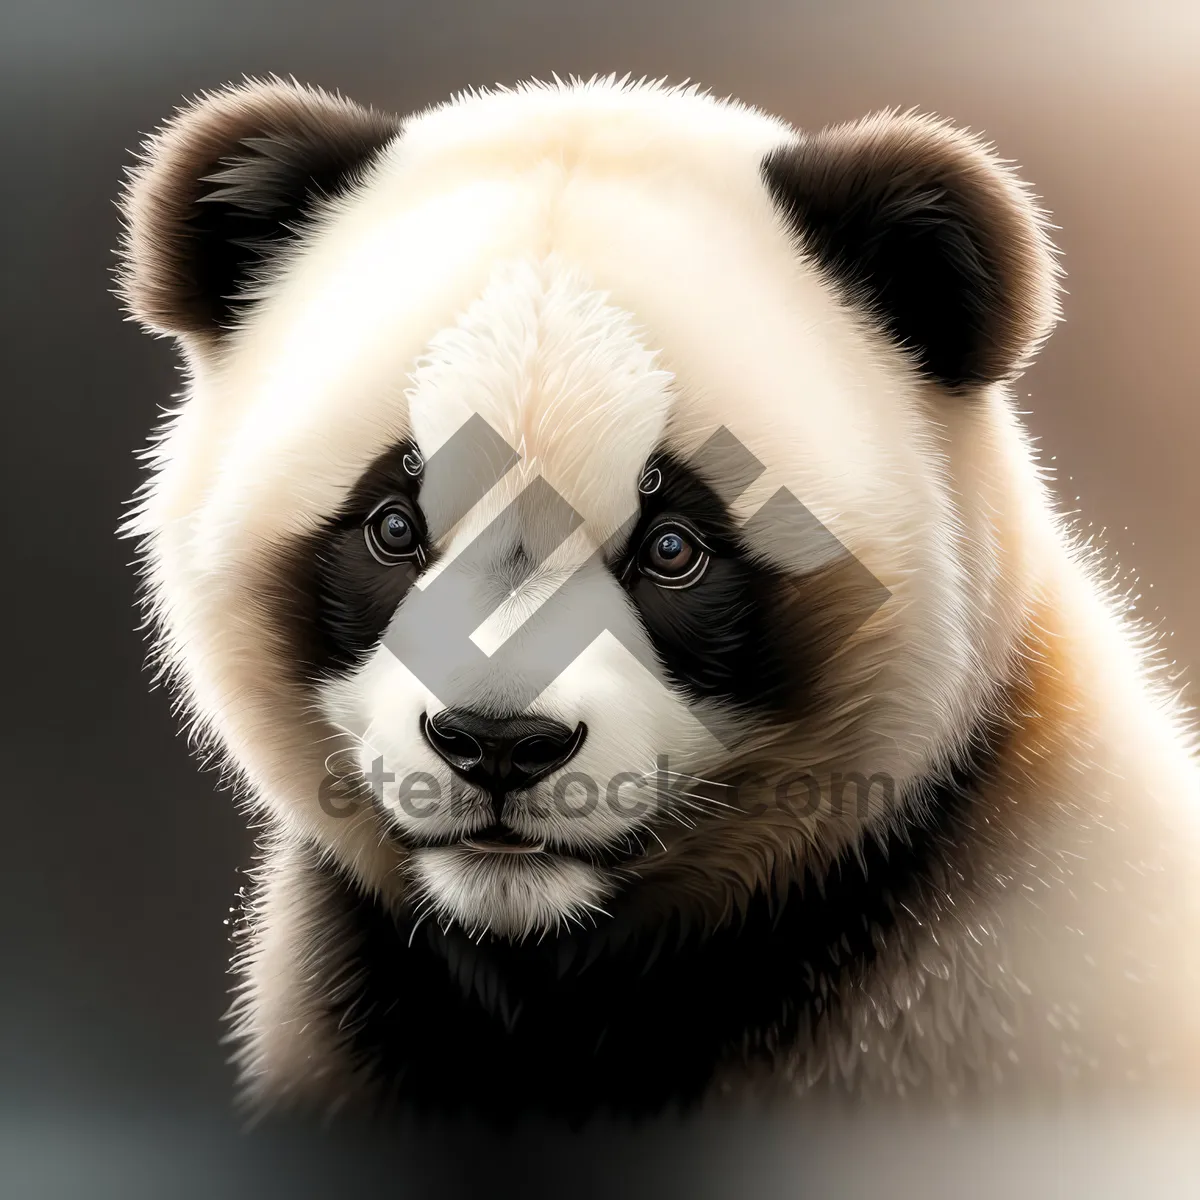 Picture of Adorable little panda cub showcasing its furry cuteness.